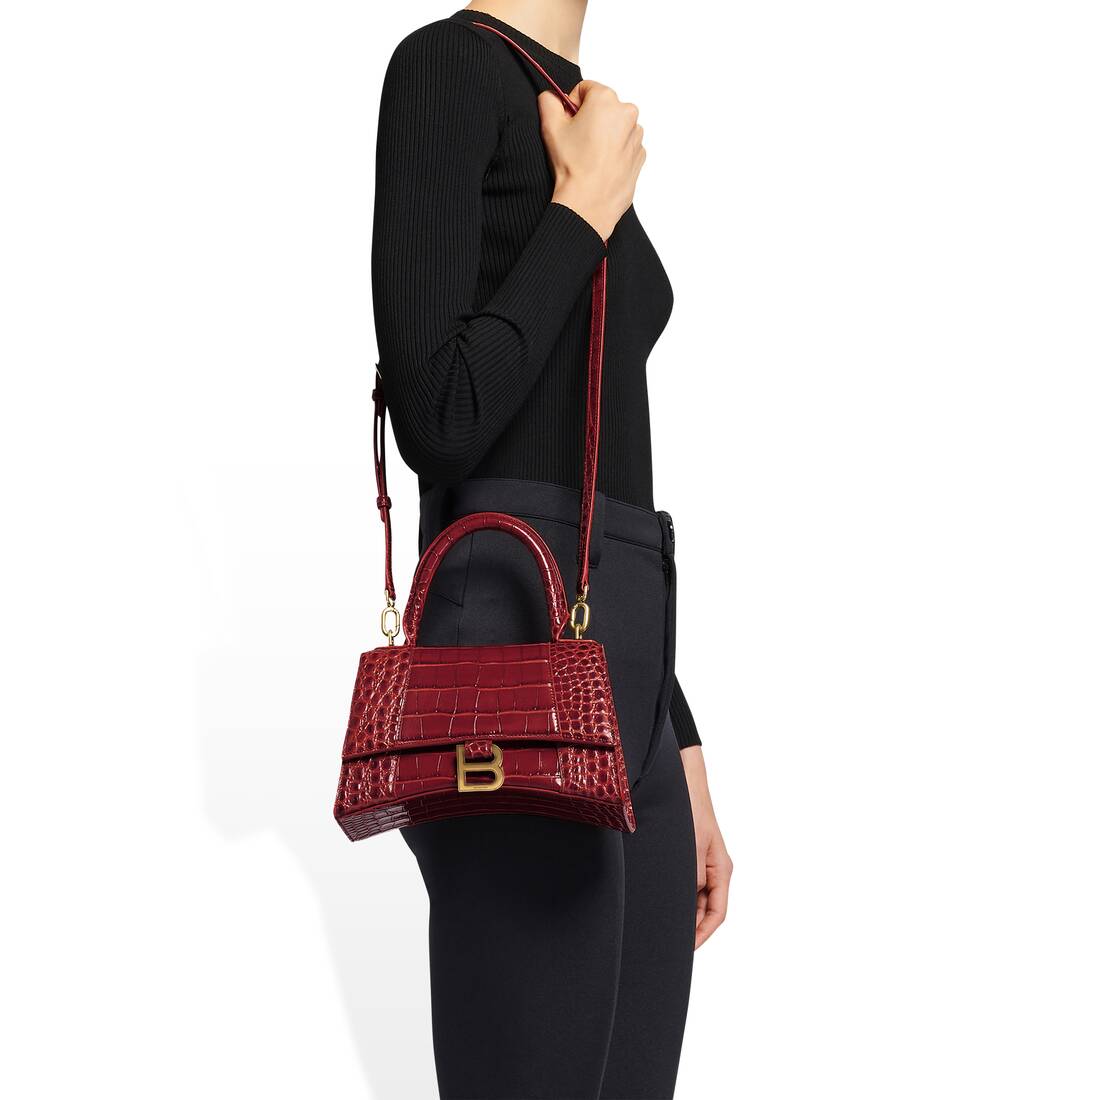 NEW Stylish Garnet Red Soft Leather Lg Six Pocket 11x15x4.5 Shoulder Bag Purse